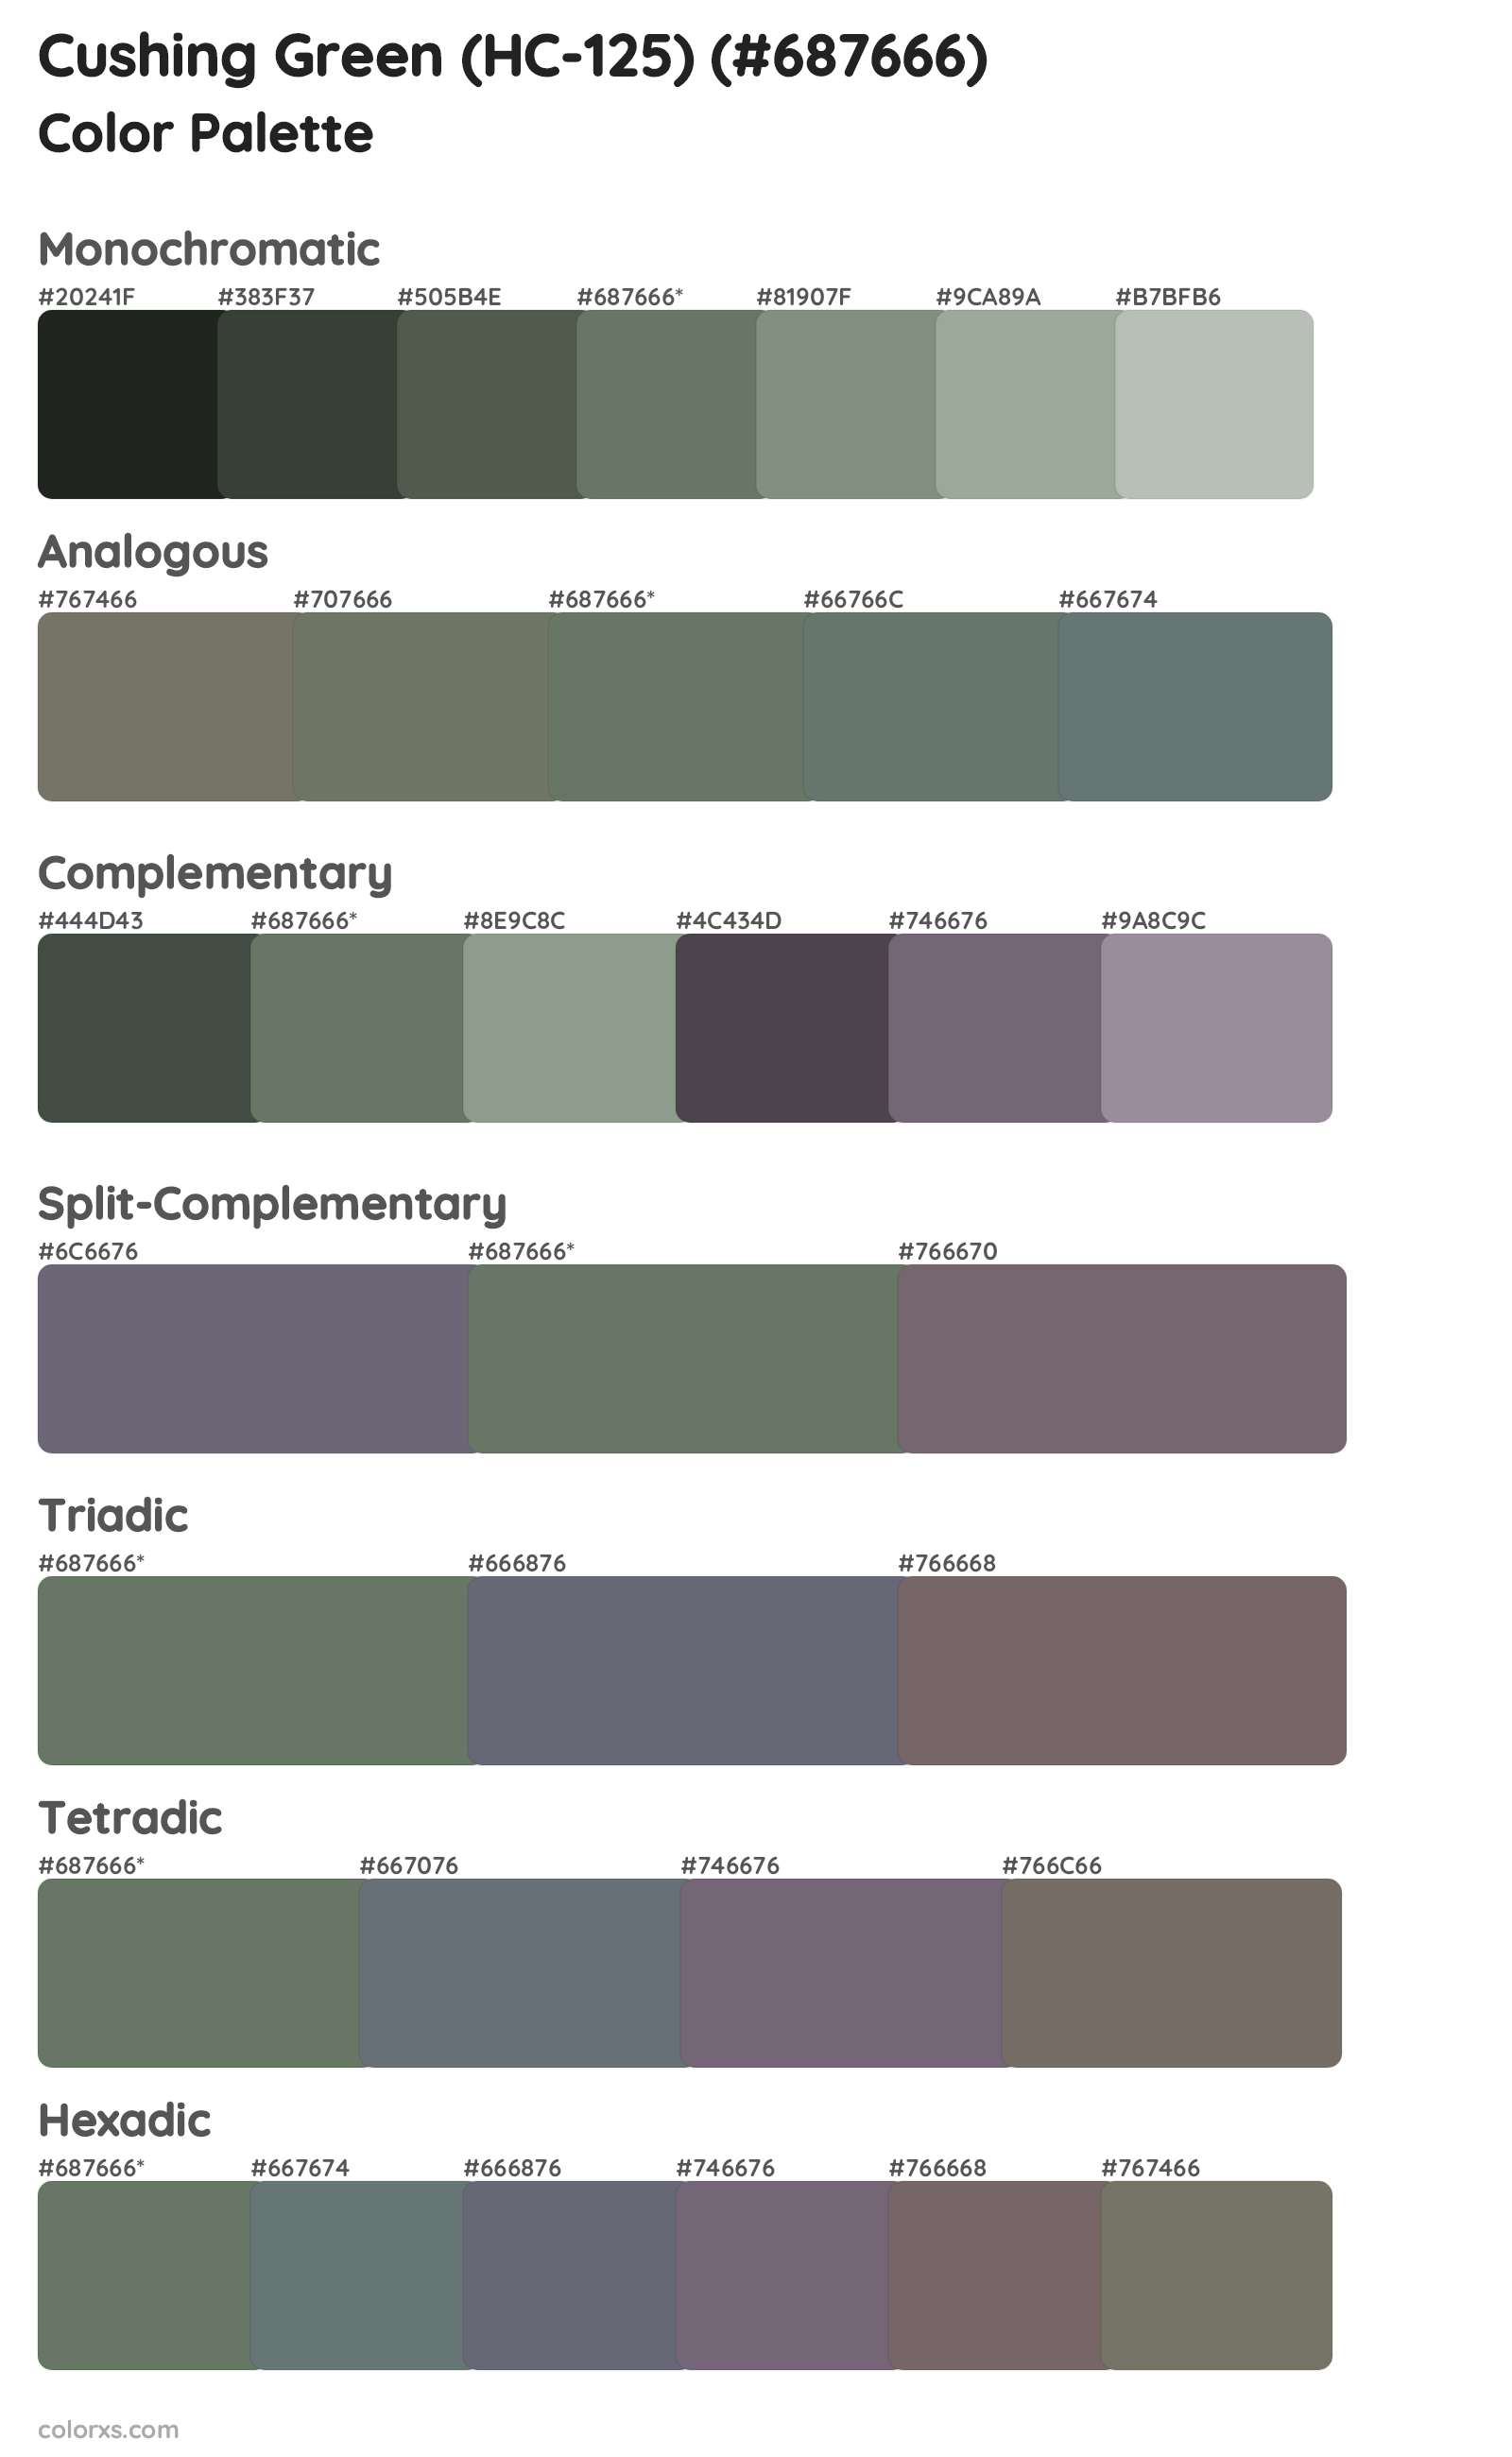 Cushing Green (HC-125) Color Scheme Palettes